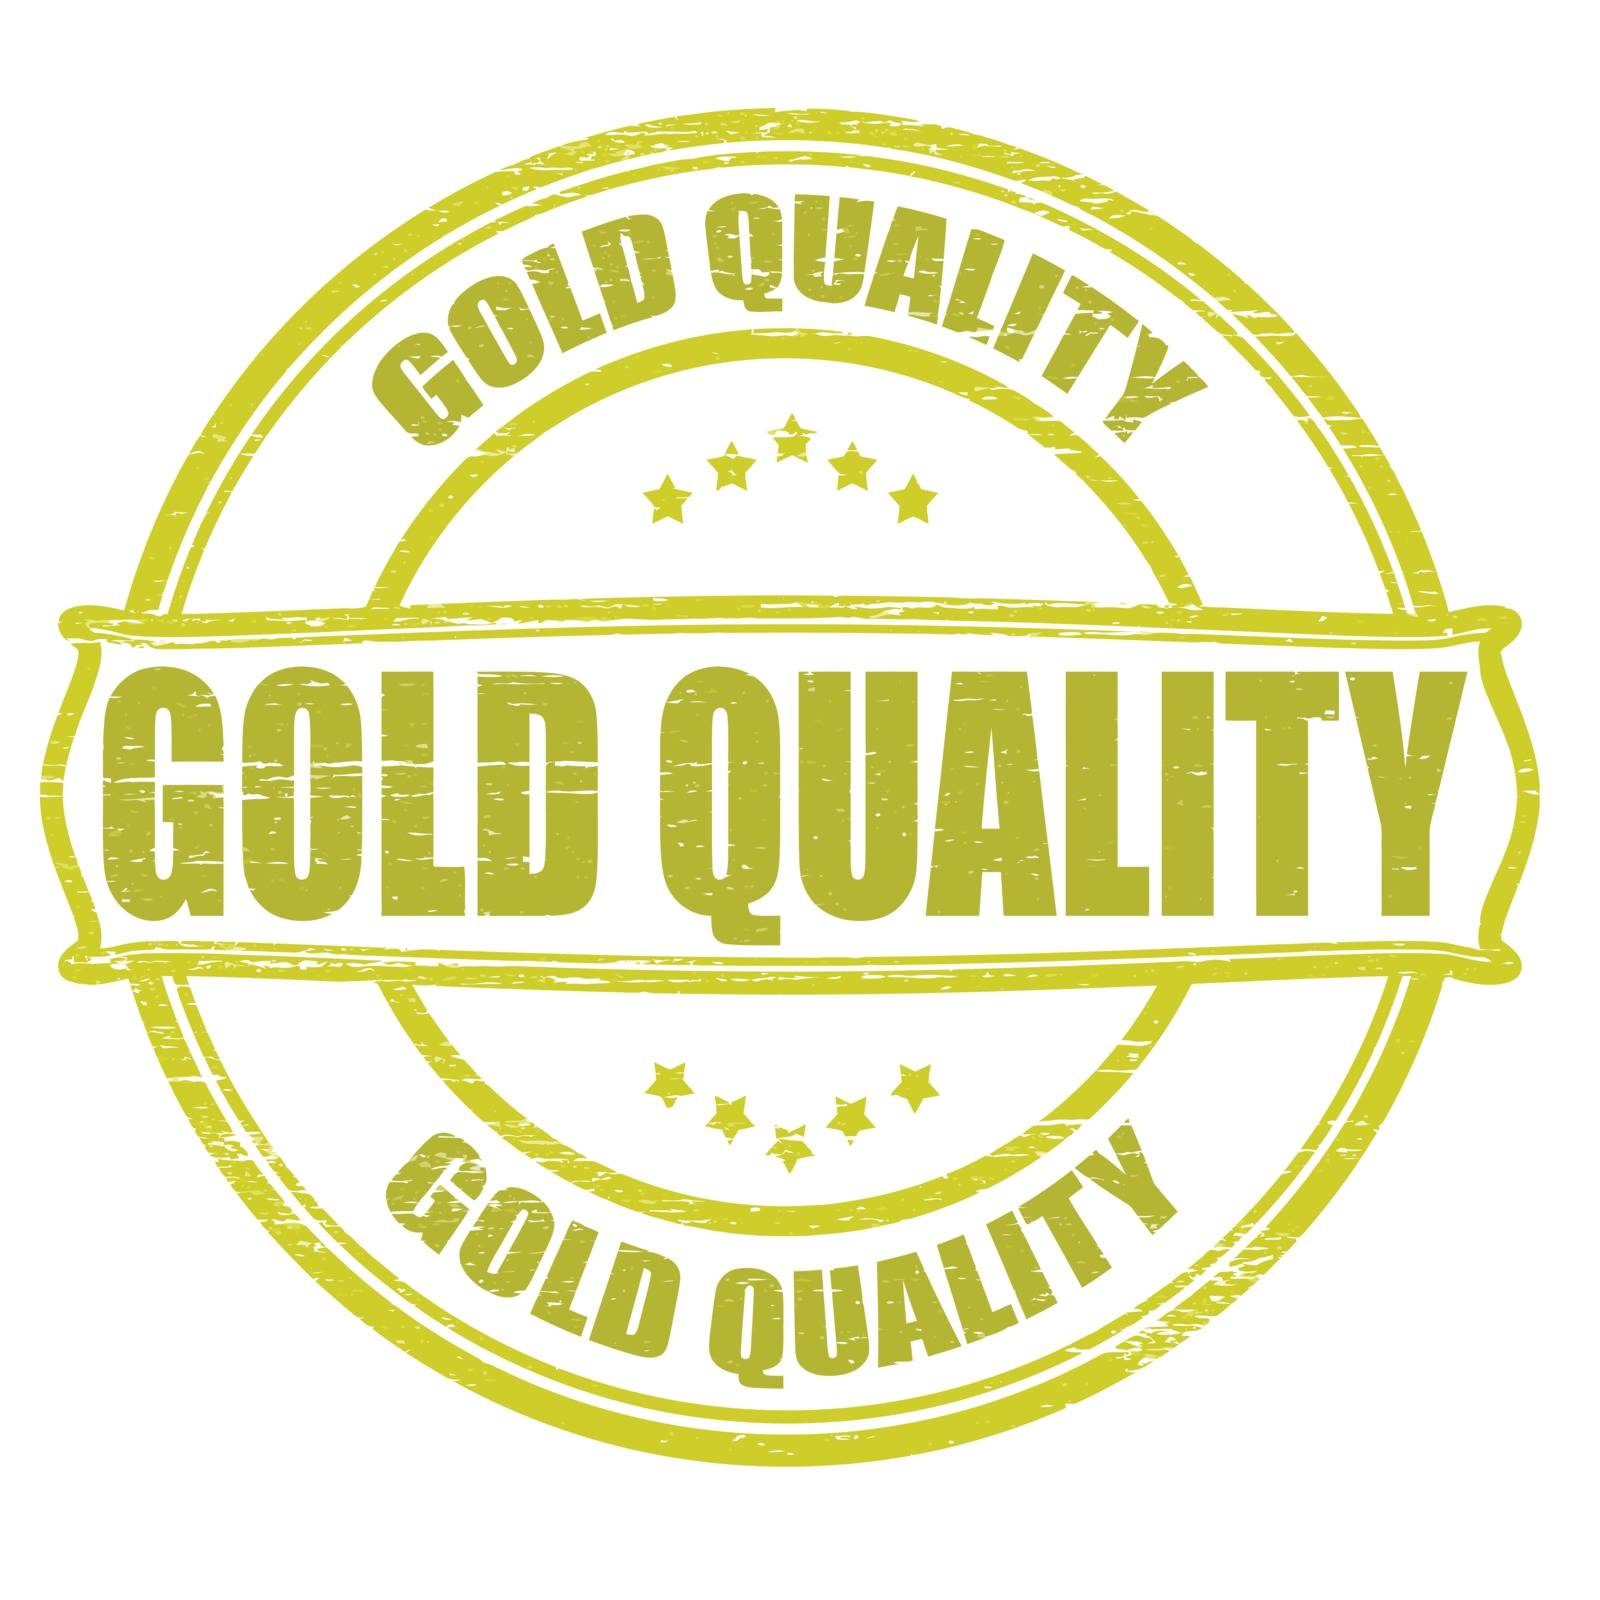 Gold quality by carmenbobo